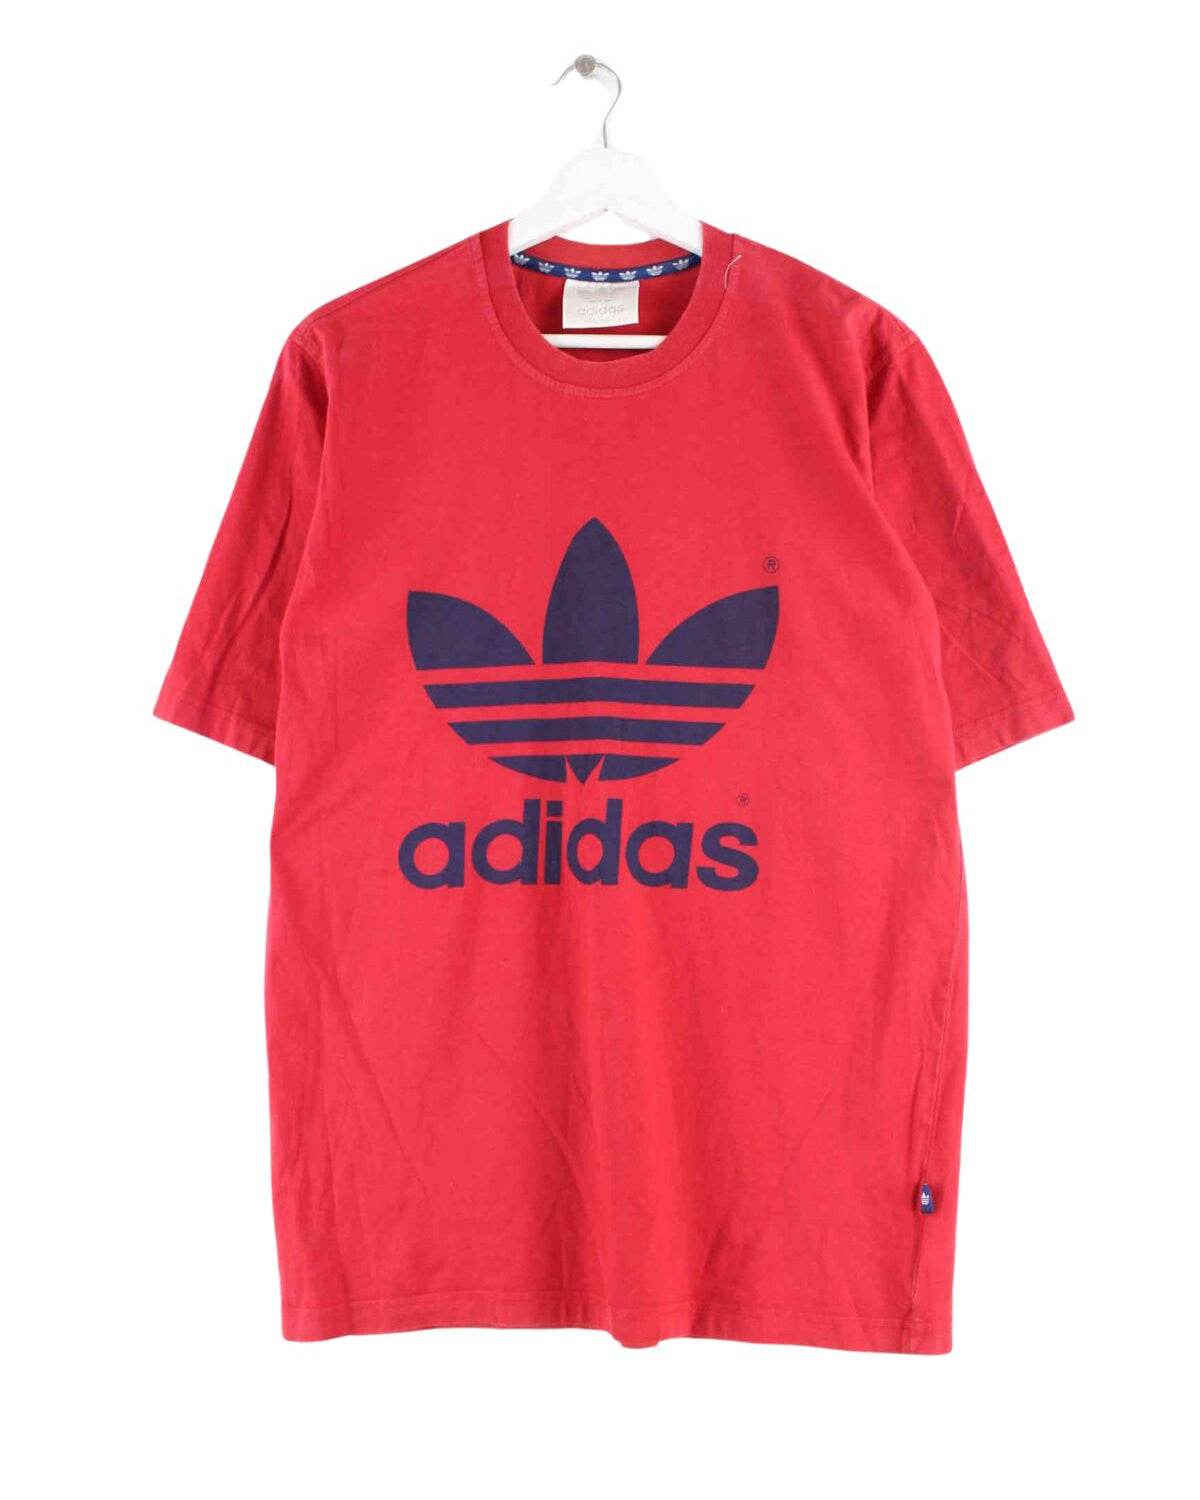 Adidas 80s Vintage Trefoil Print T-Shirt Rot M (front image)